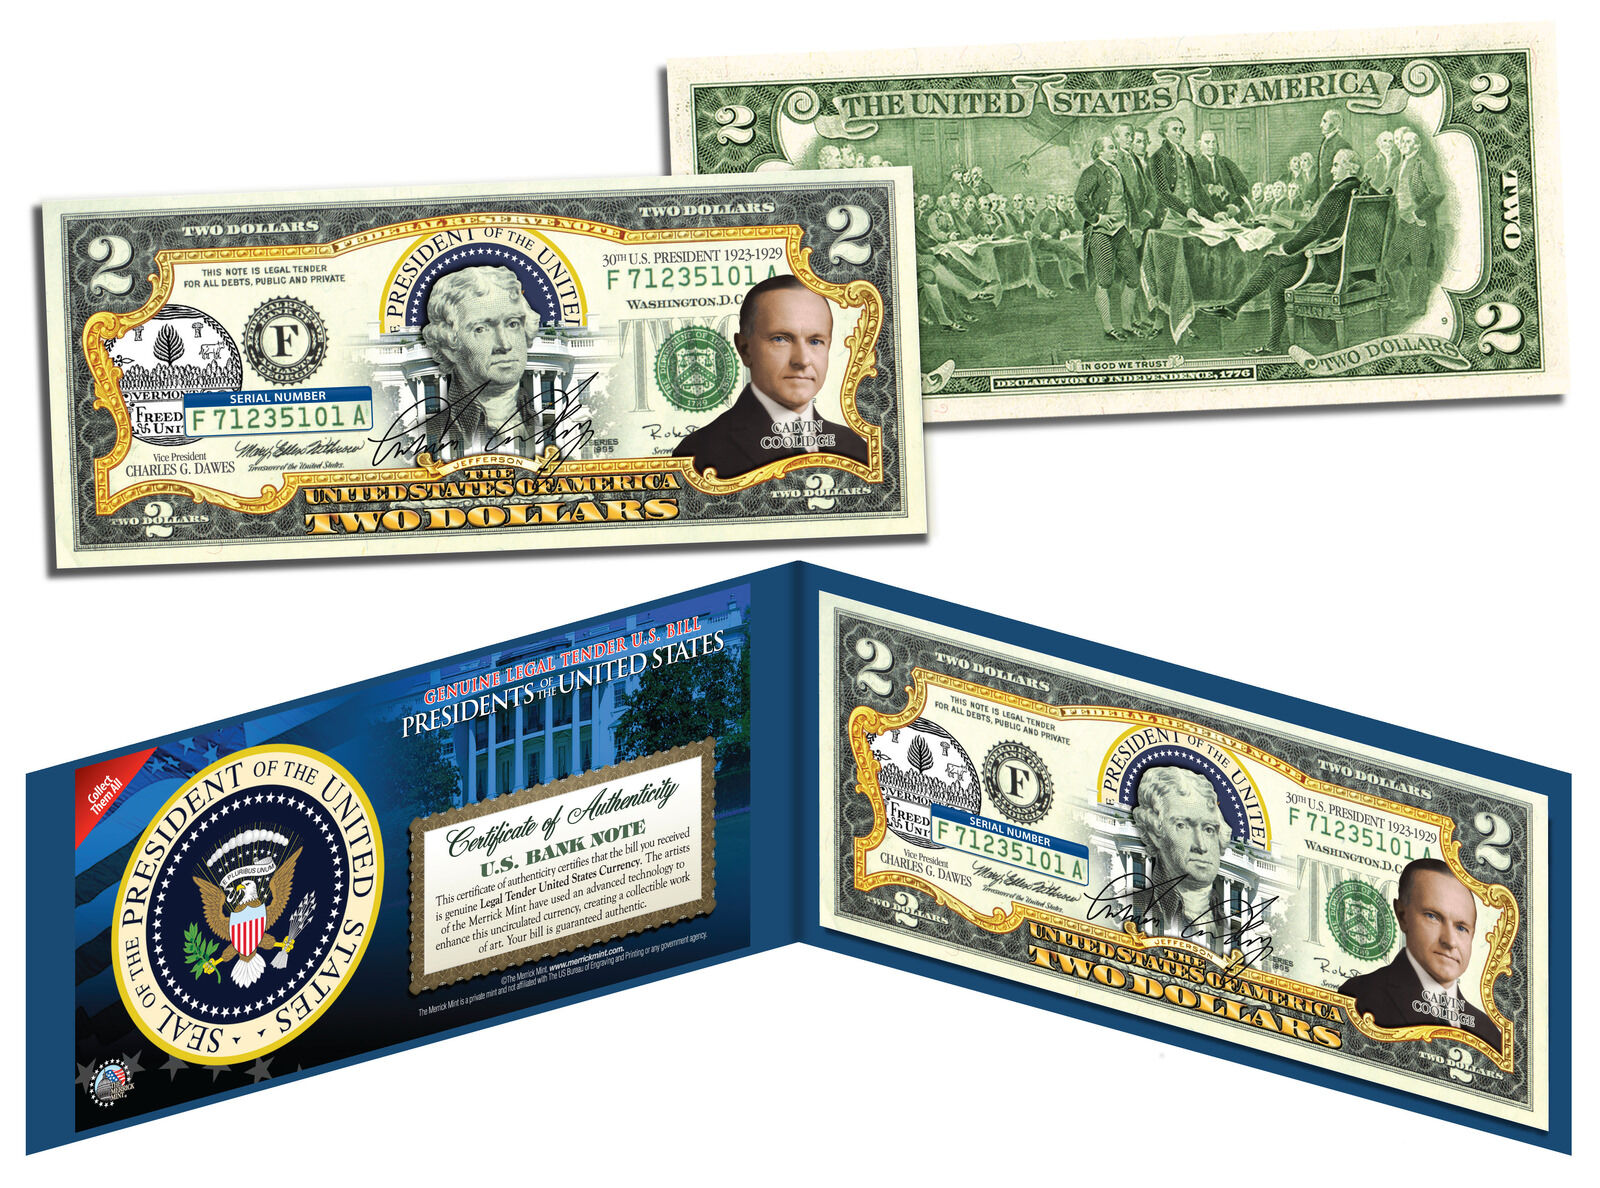 CALVIN COOLIDGE * 30th U.S. President * Colorized $2 Bill - Genuine Legal Tender